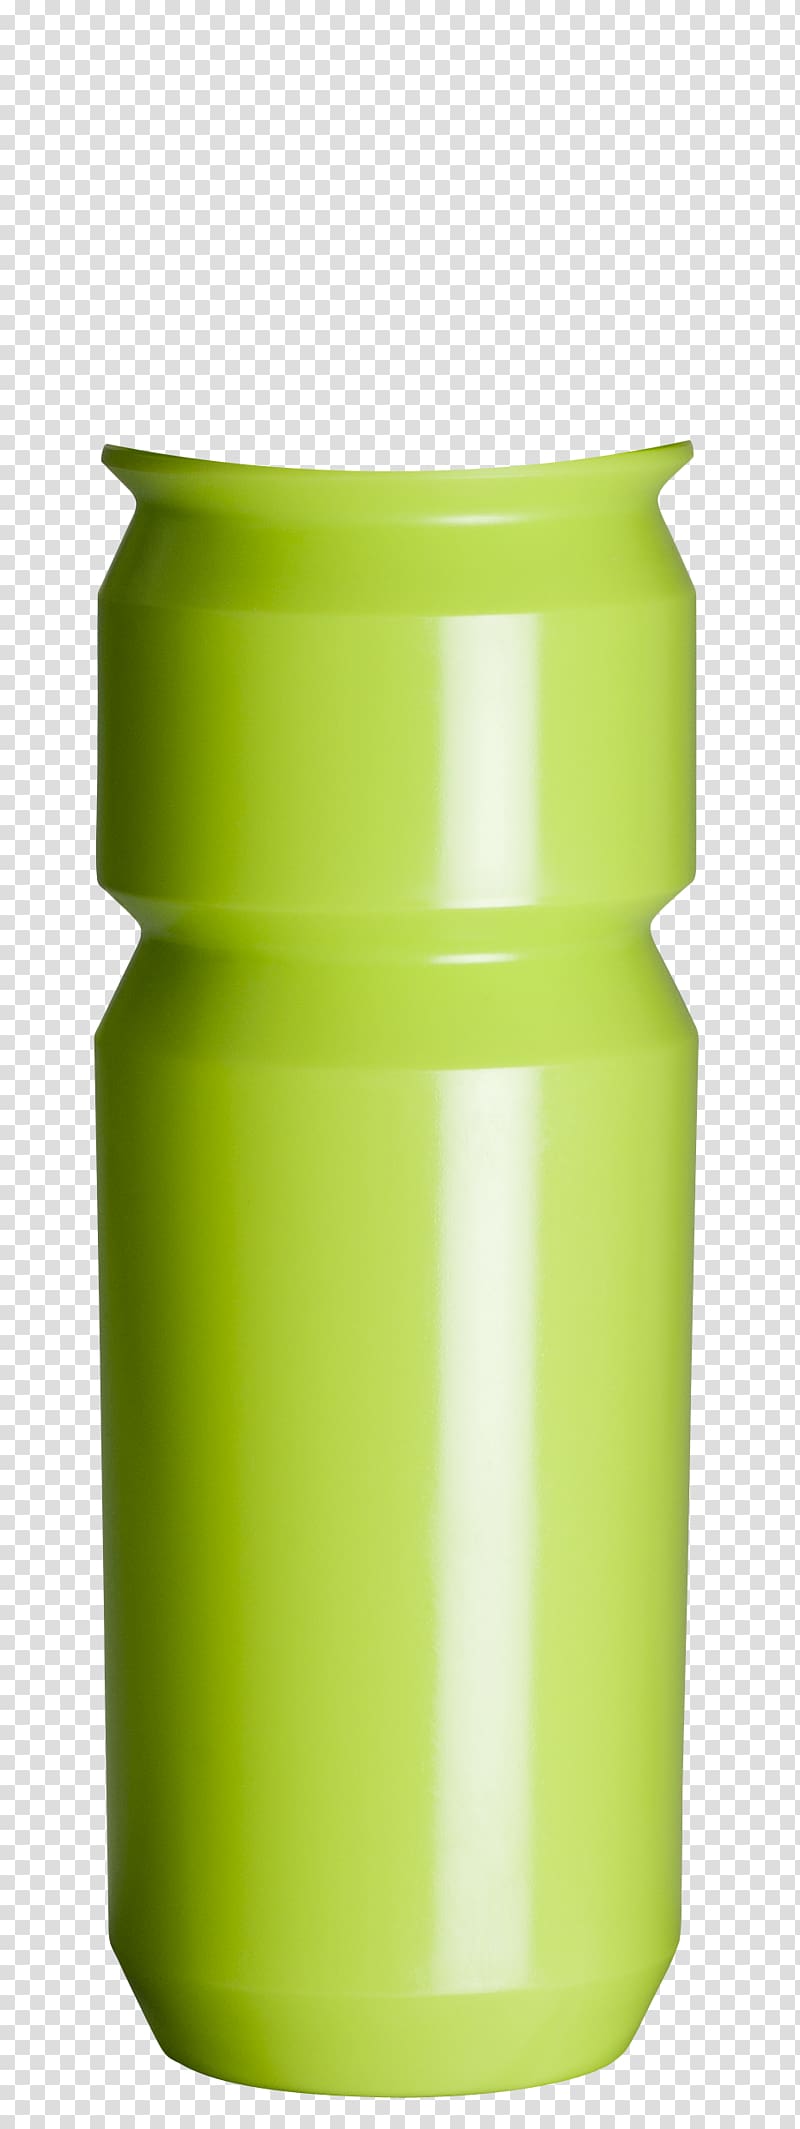 Shiva Bottle Screw cap Yellow Closure, SHIVA transparent background PNG clipart